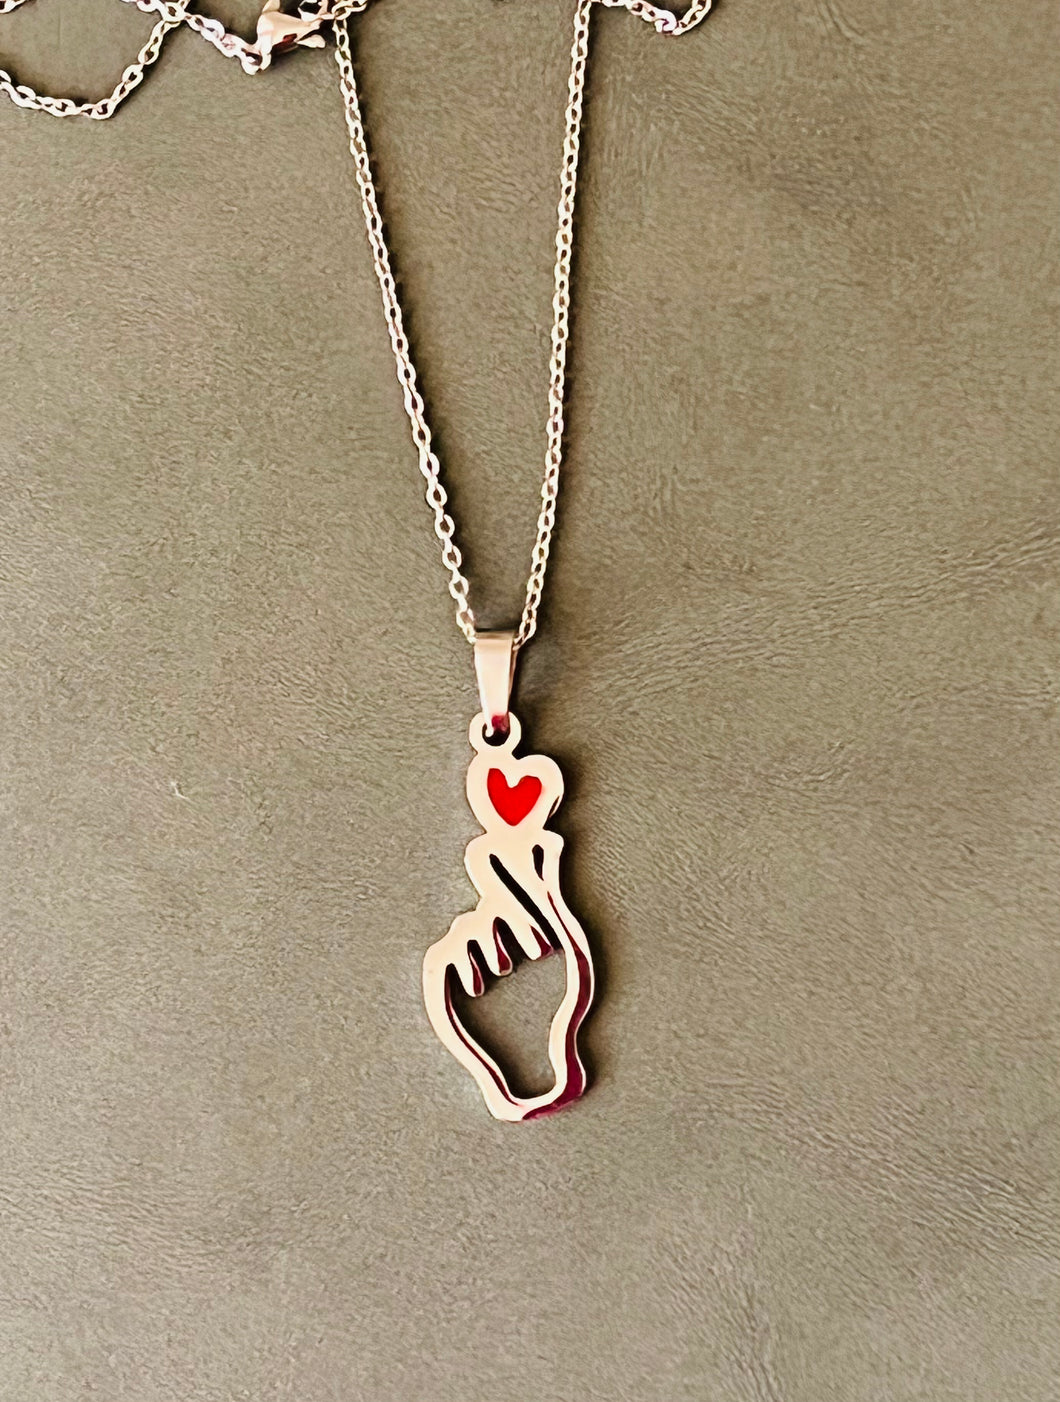 Jimin heart necklace